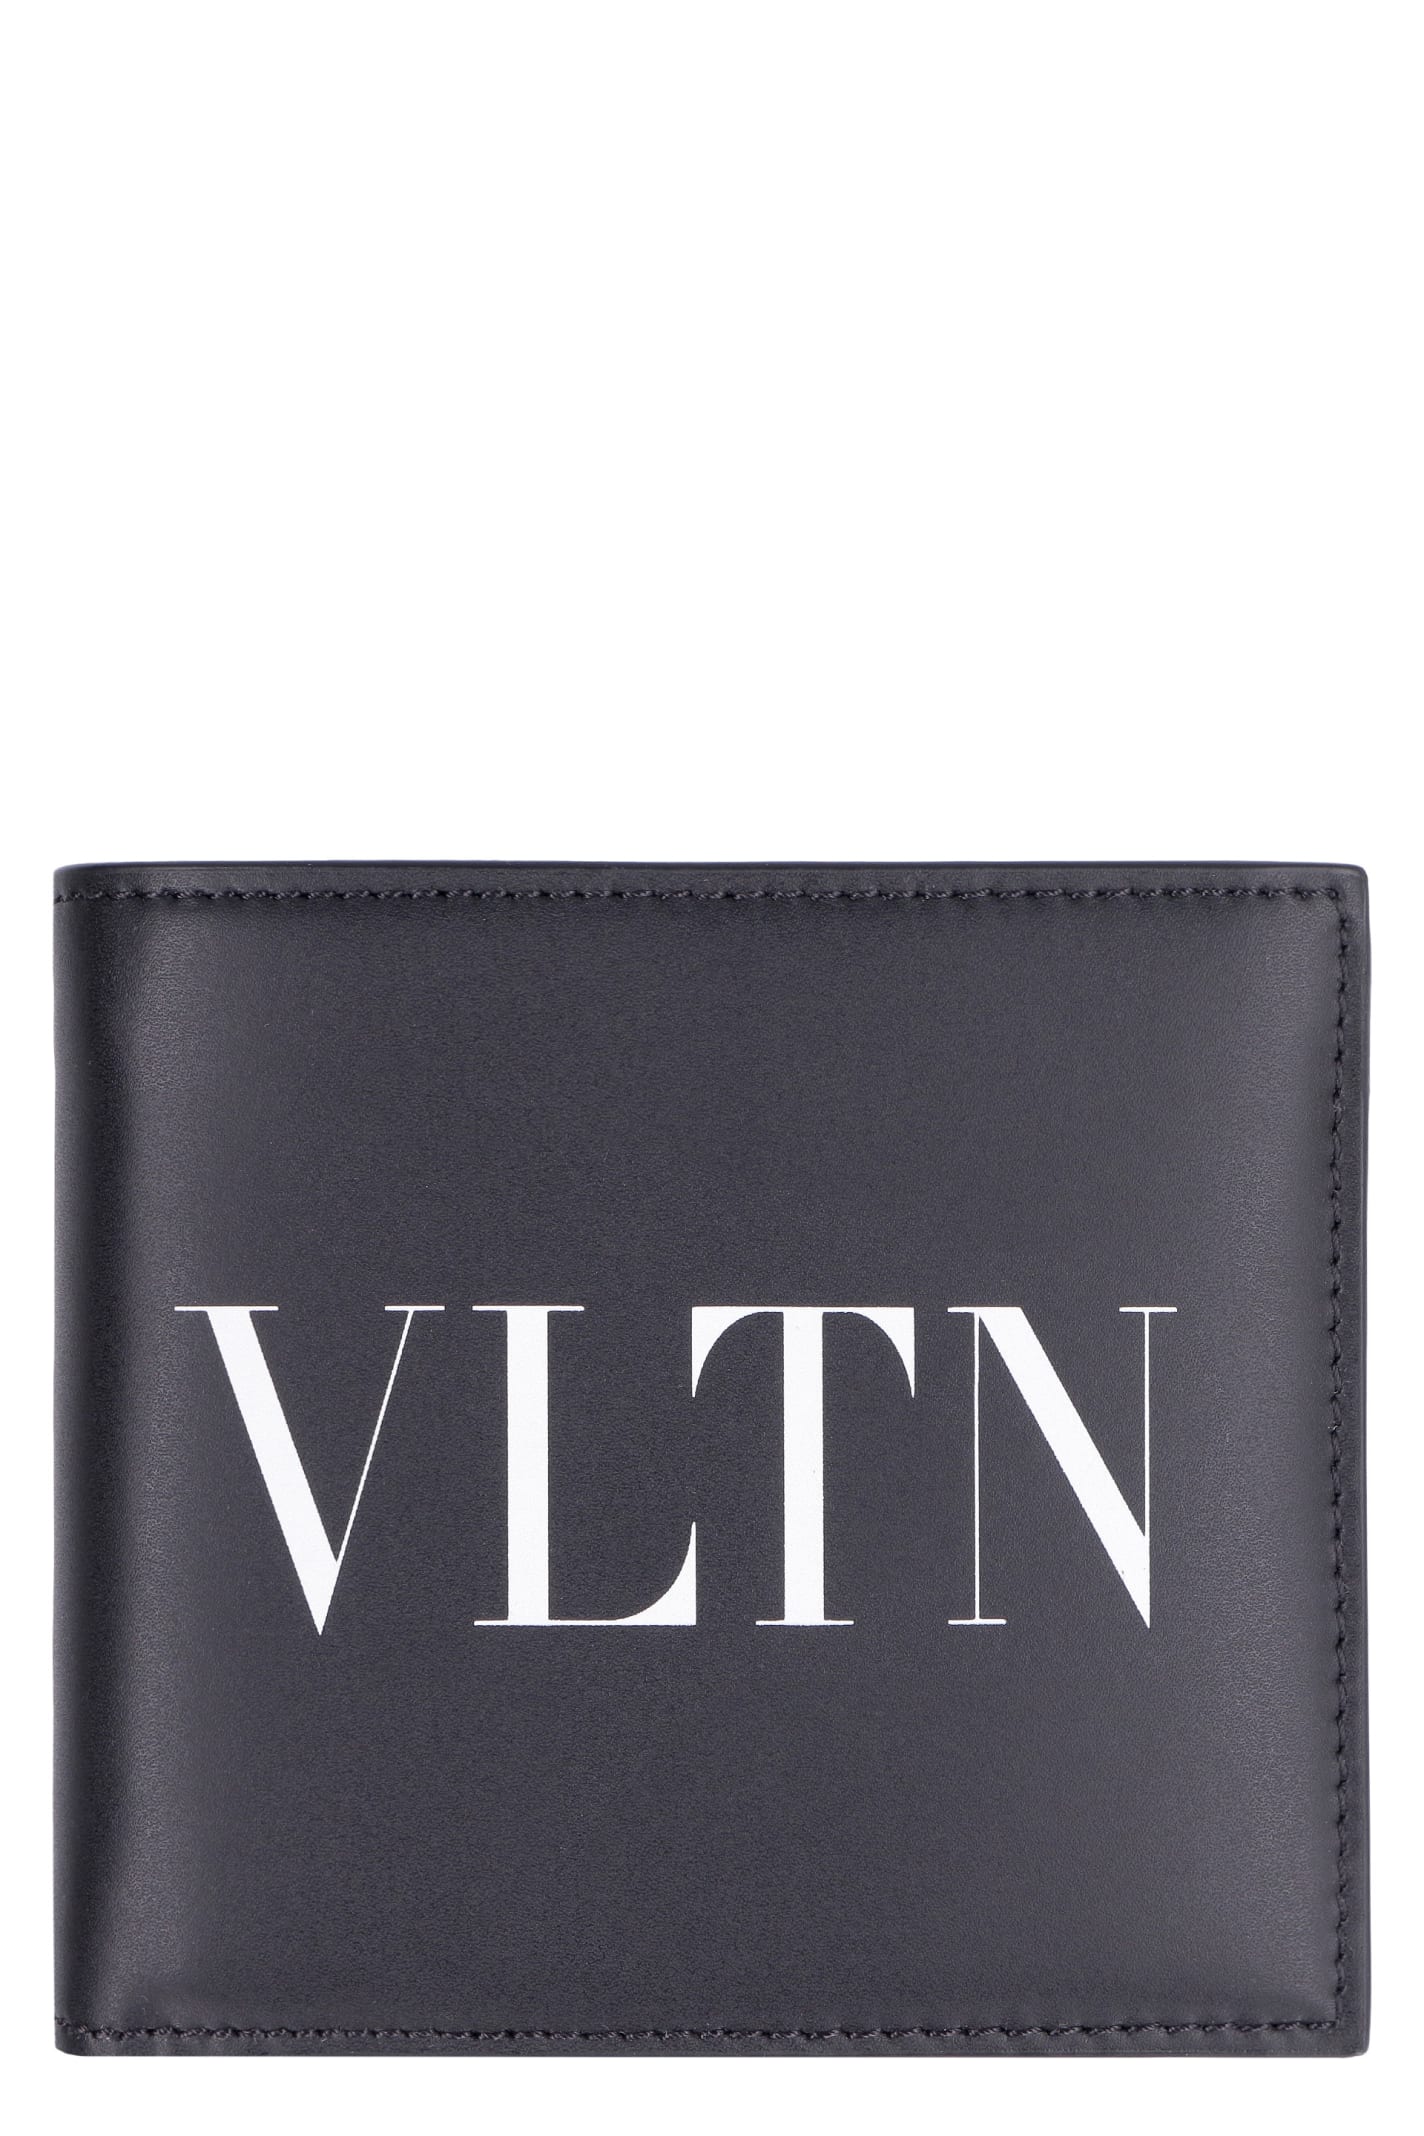 Valentino Logo Leather Wallet - Valentino Garavani